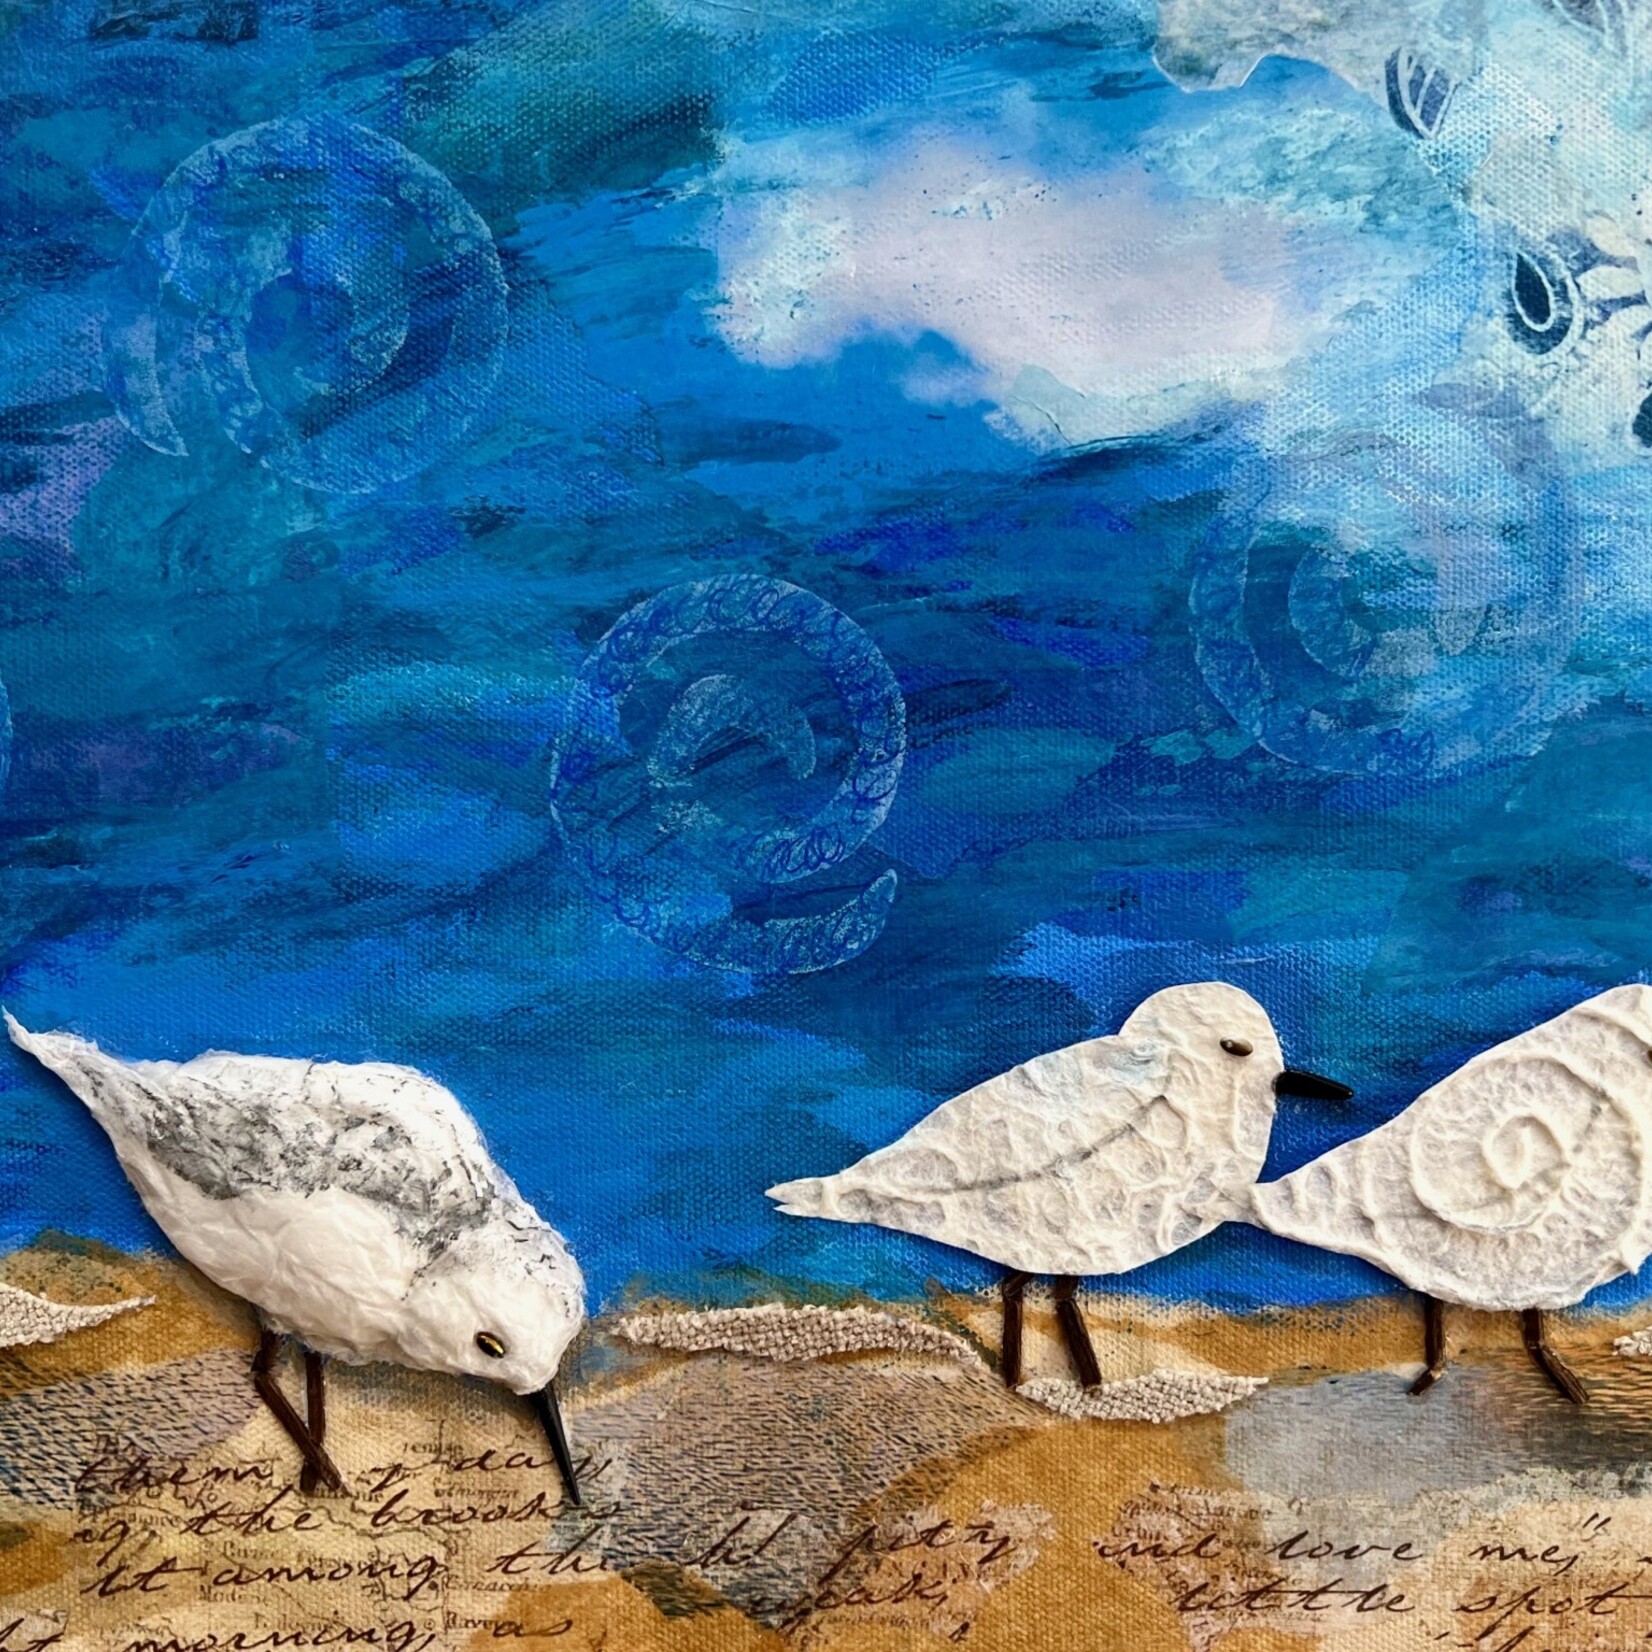 Susan Estrella "Brunch at the Beach", Mixed media collage w/3 birds/handmade paper, 16x12", SUSE